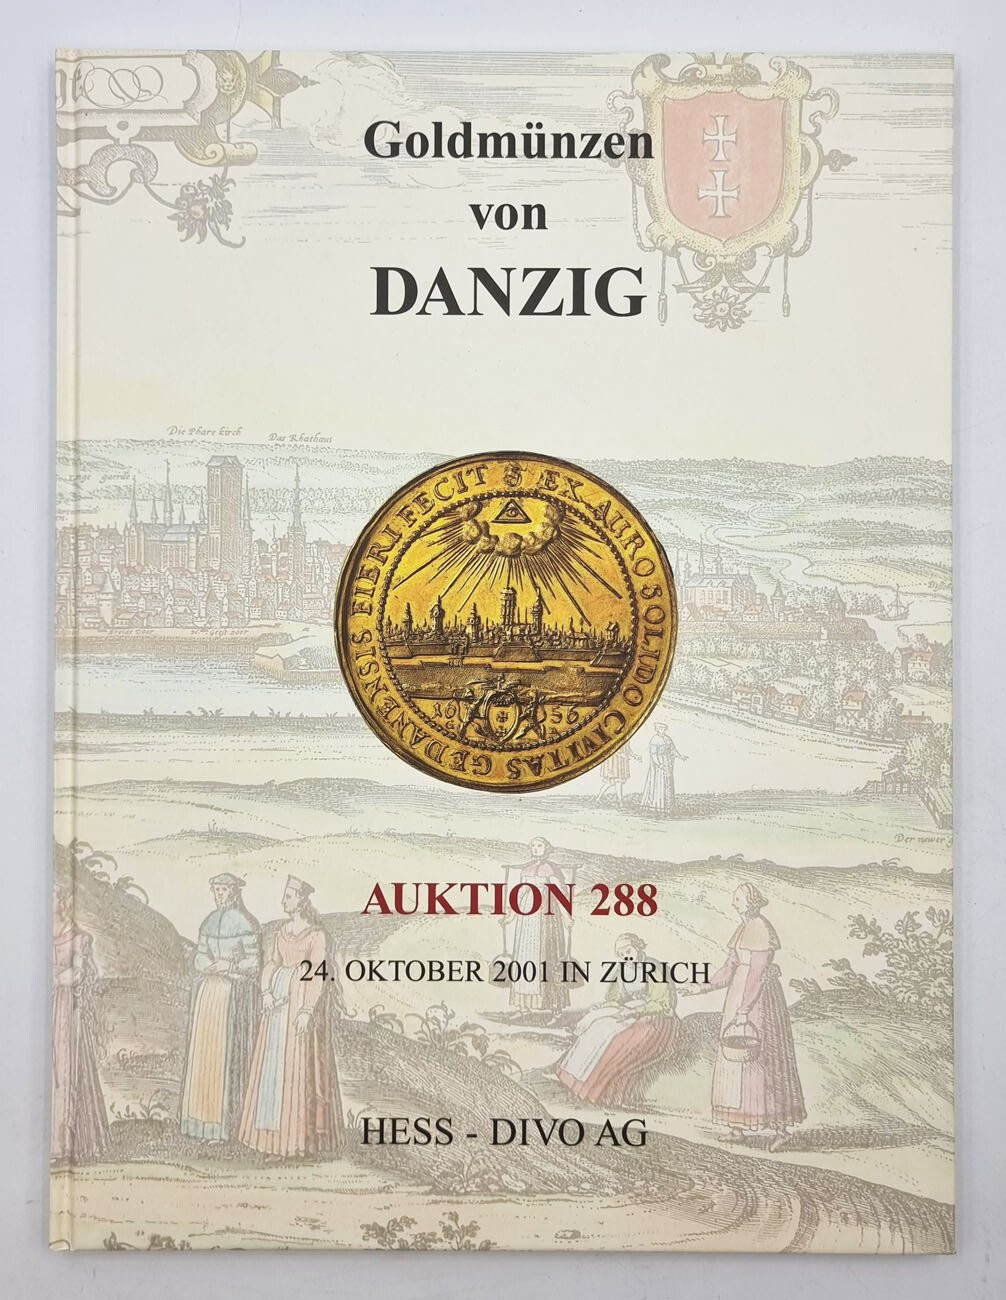 Katalog Aukcyjny. Złote monety z Gdańska - Hess-Divo AG, aukcja 288 - 2001 rok